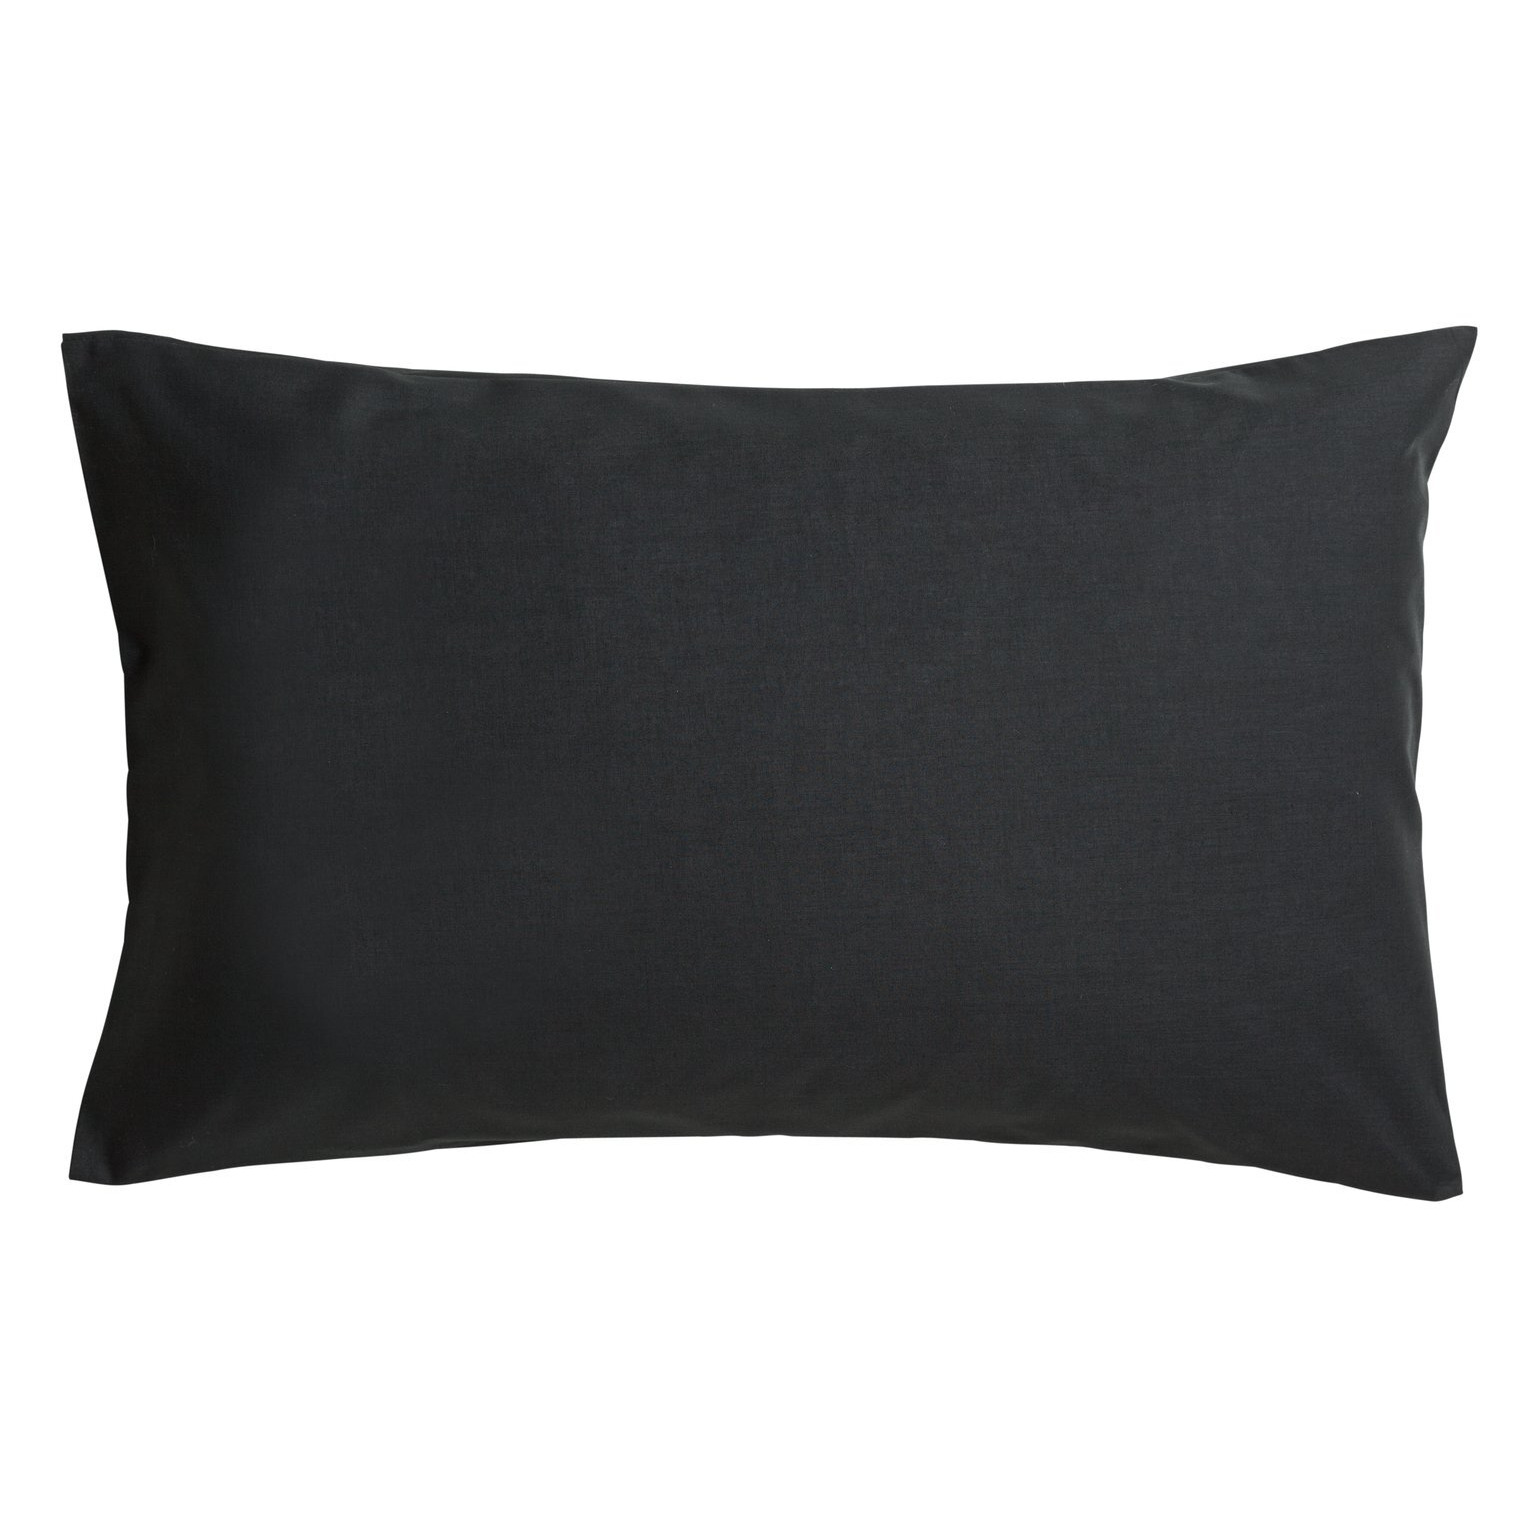 Habitat Easycare Polycotton Standard Pillowcase Pair - Black - image 1